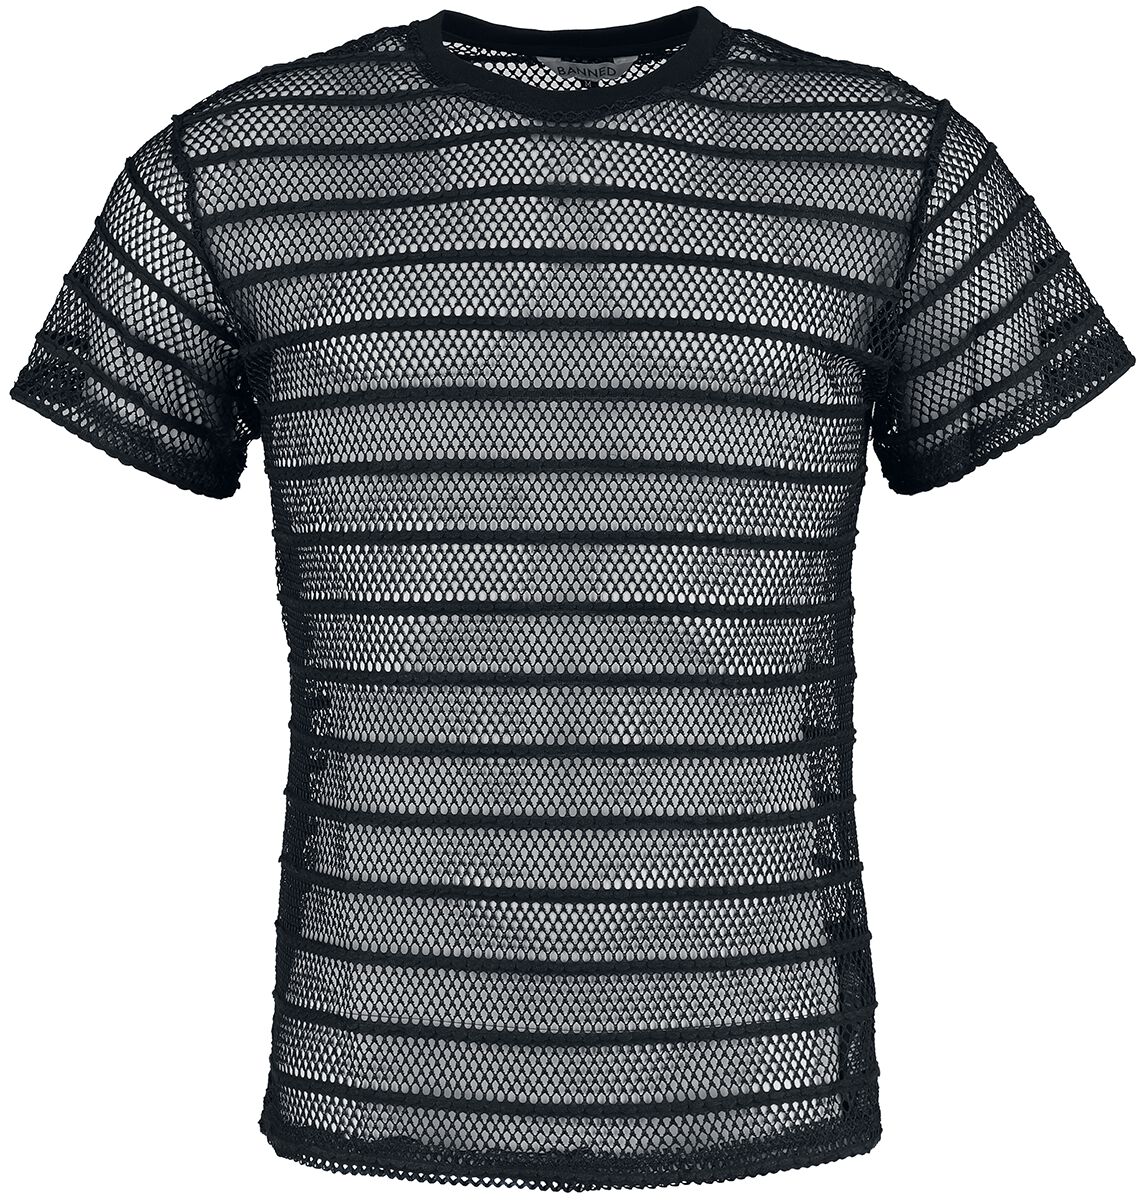 Image of T-Shirt Gothic di Banned Alternative - Black Mesh Shirt - S a XL - Uomo - nero